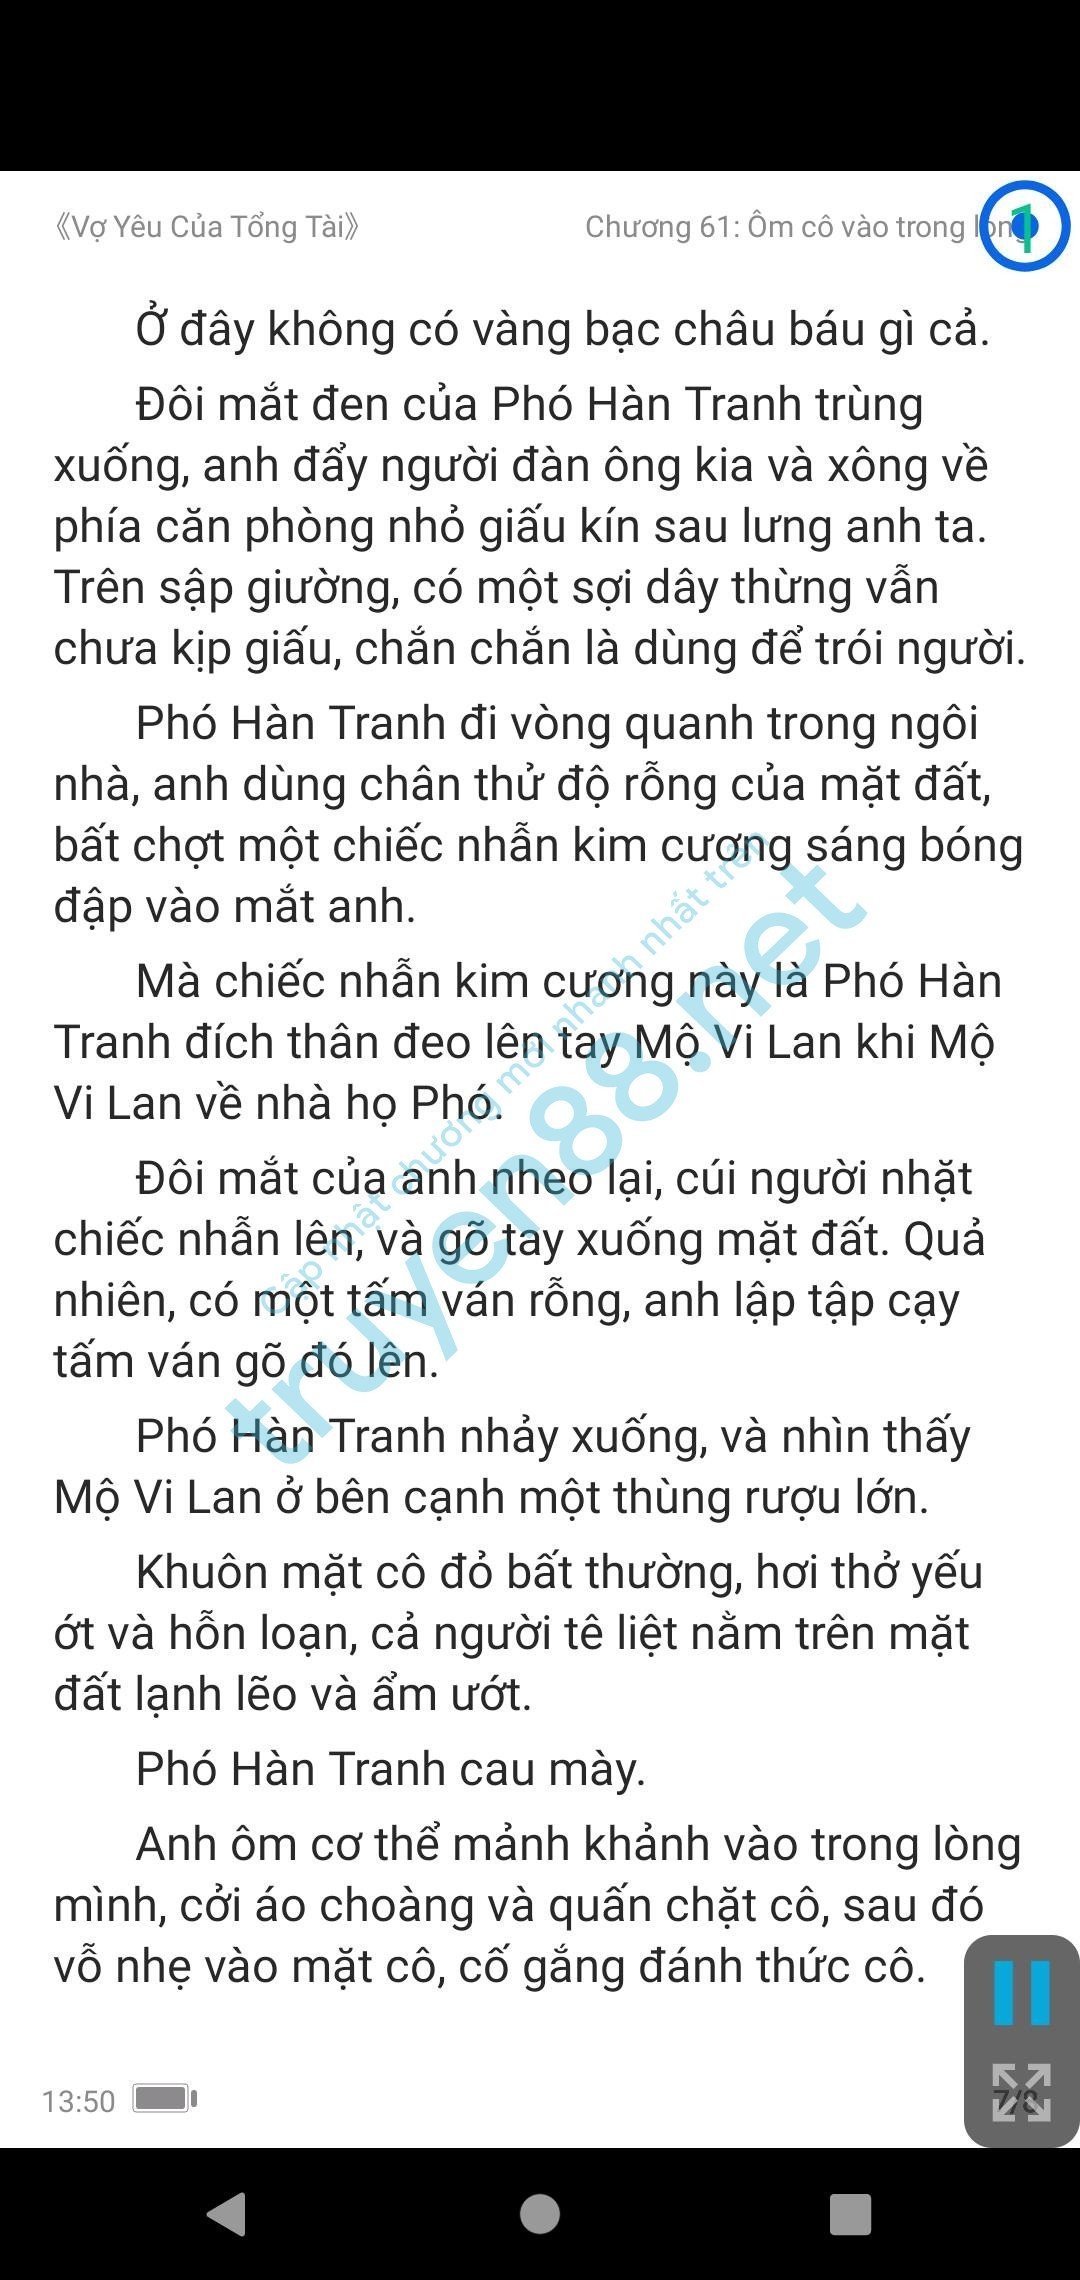 vo-yeu-cua-tong-tai-mo-vi-lan--pho-han-tranh-61-1